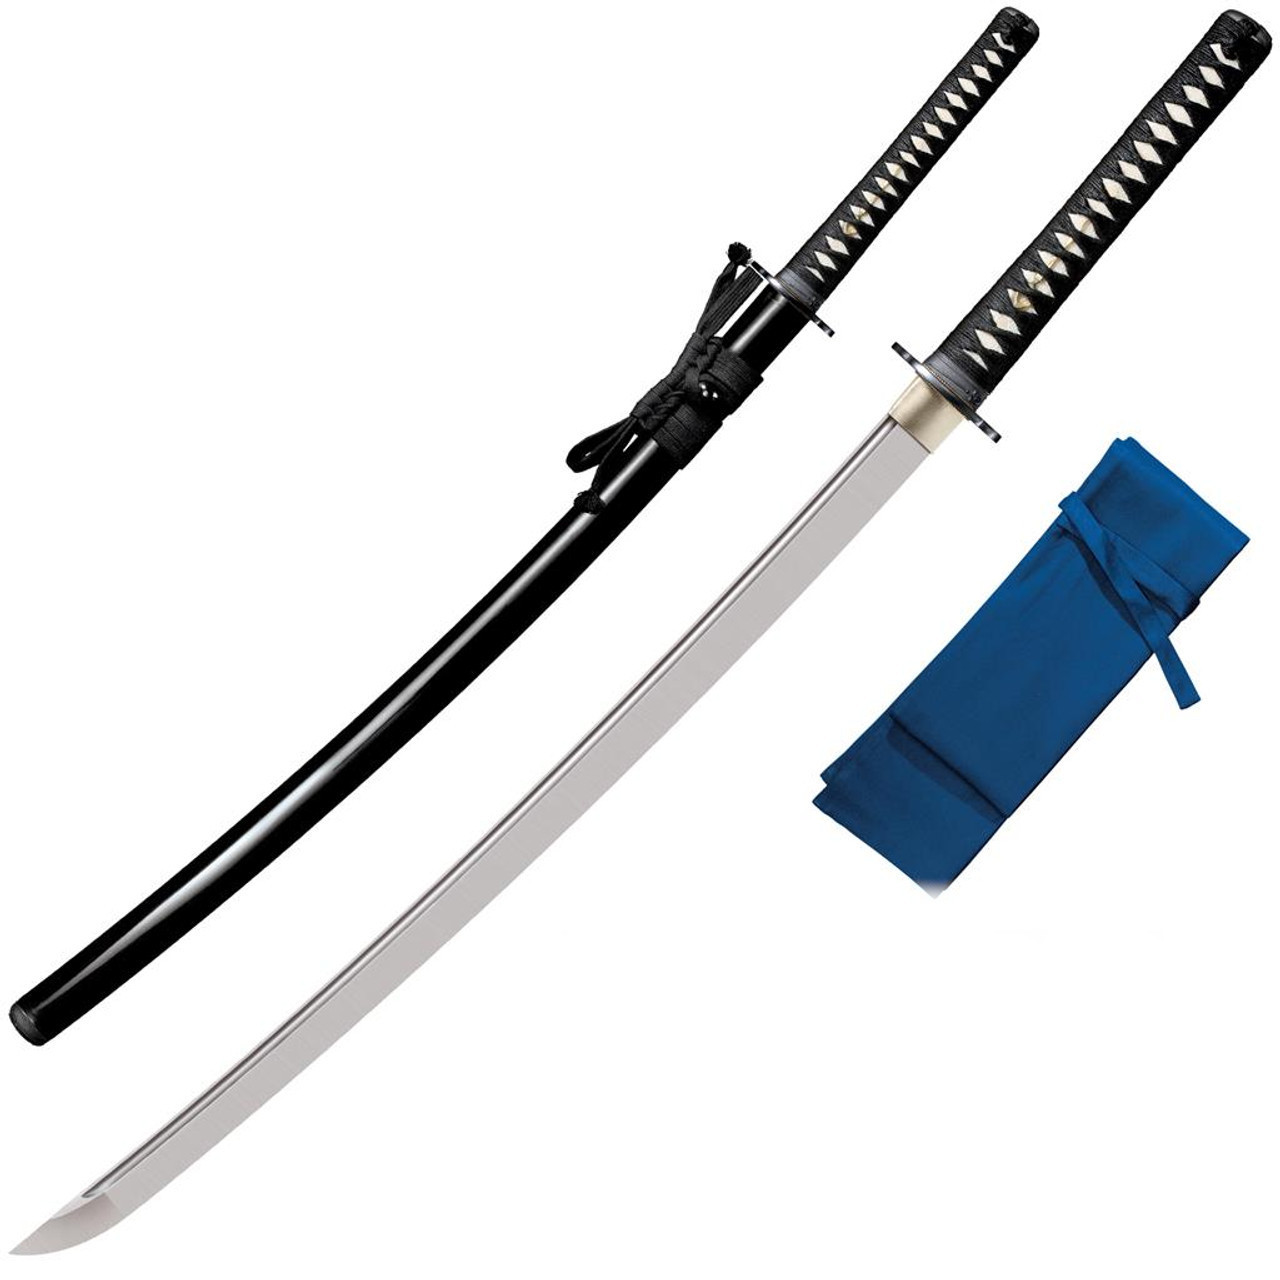 Cold Steel Warrior Series Katana Sword